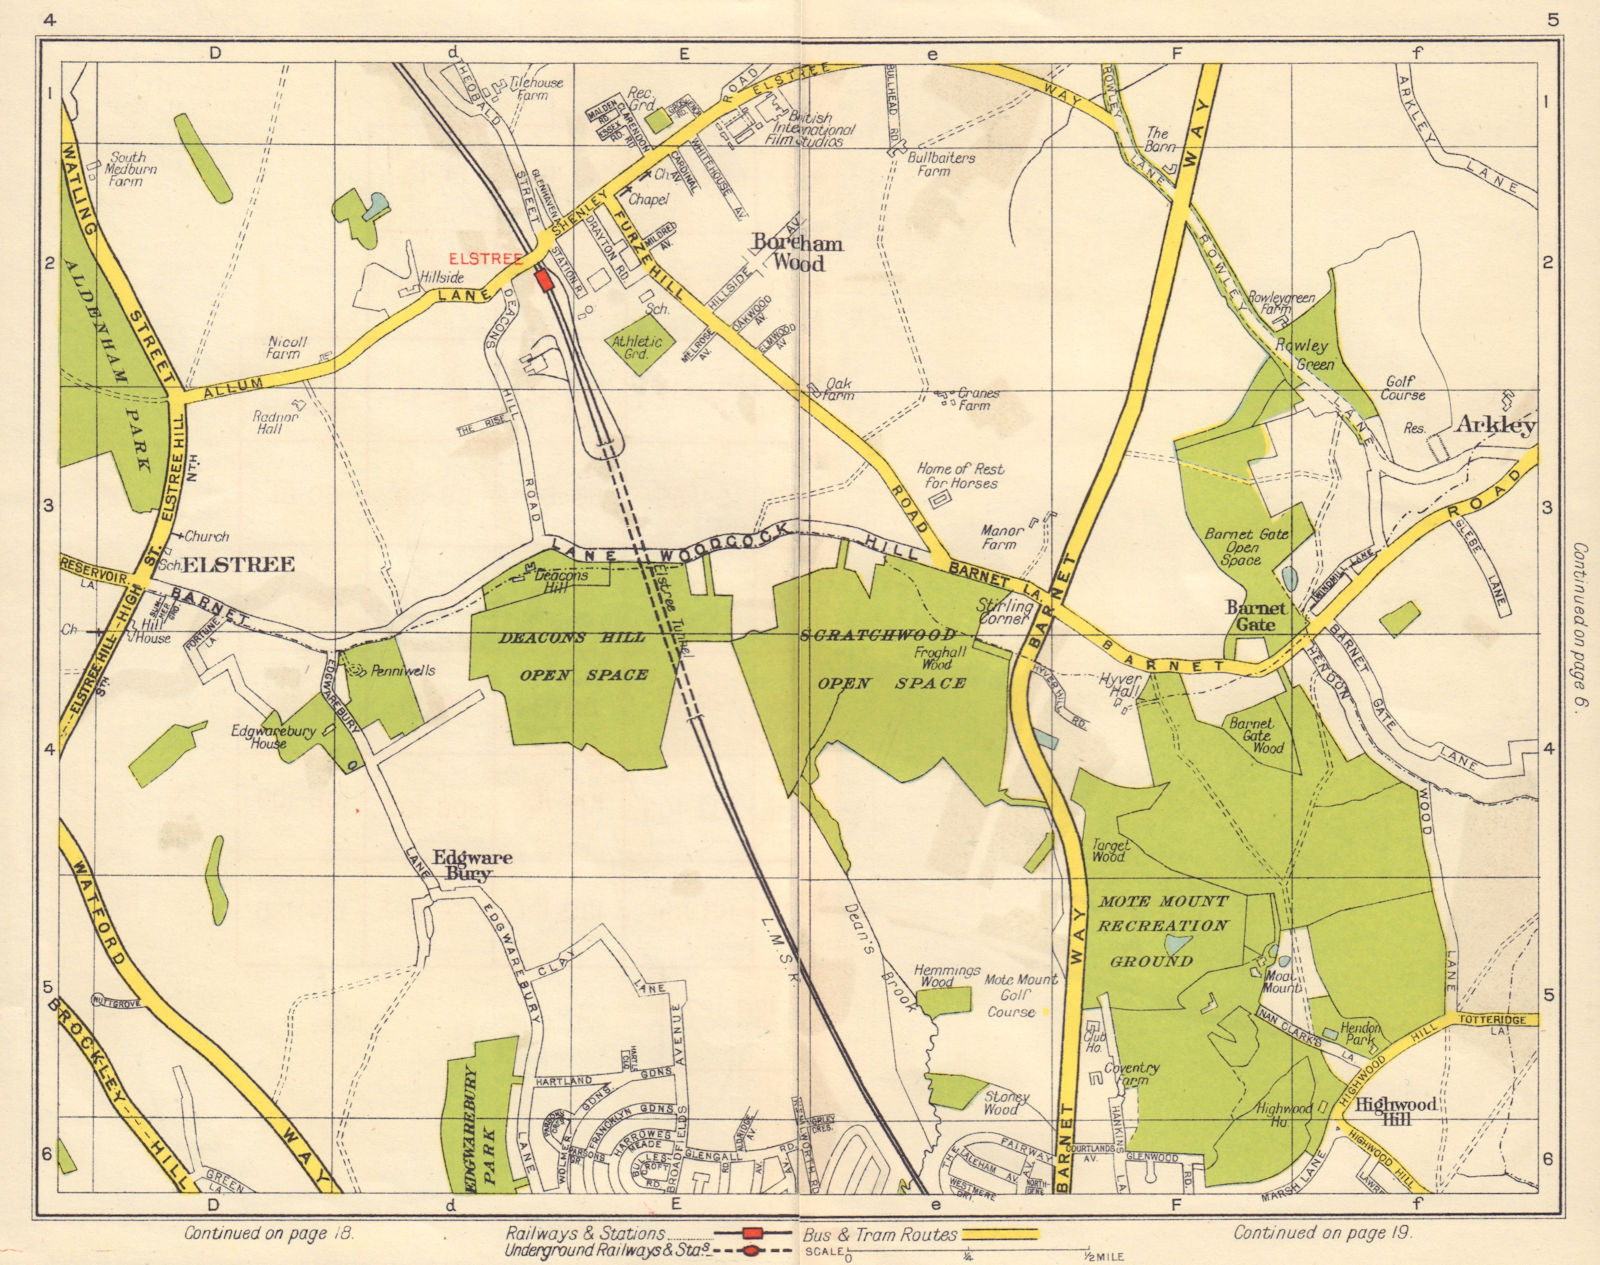 NW LONDON. Elstree Borehamwood Edgwarebury Barnet Gate Highwood Hill 1948 map